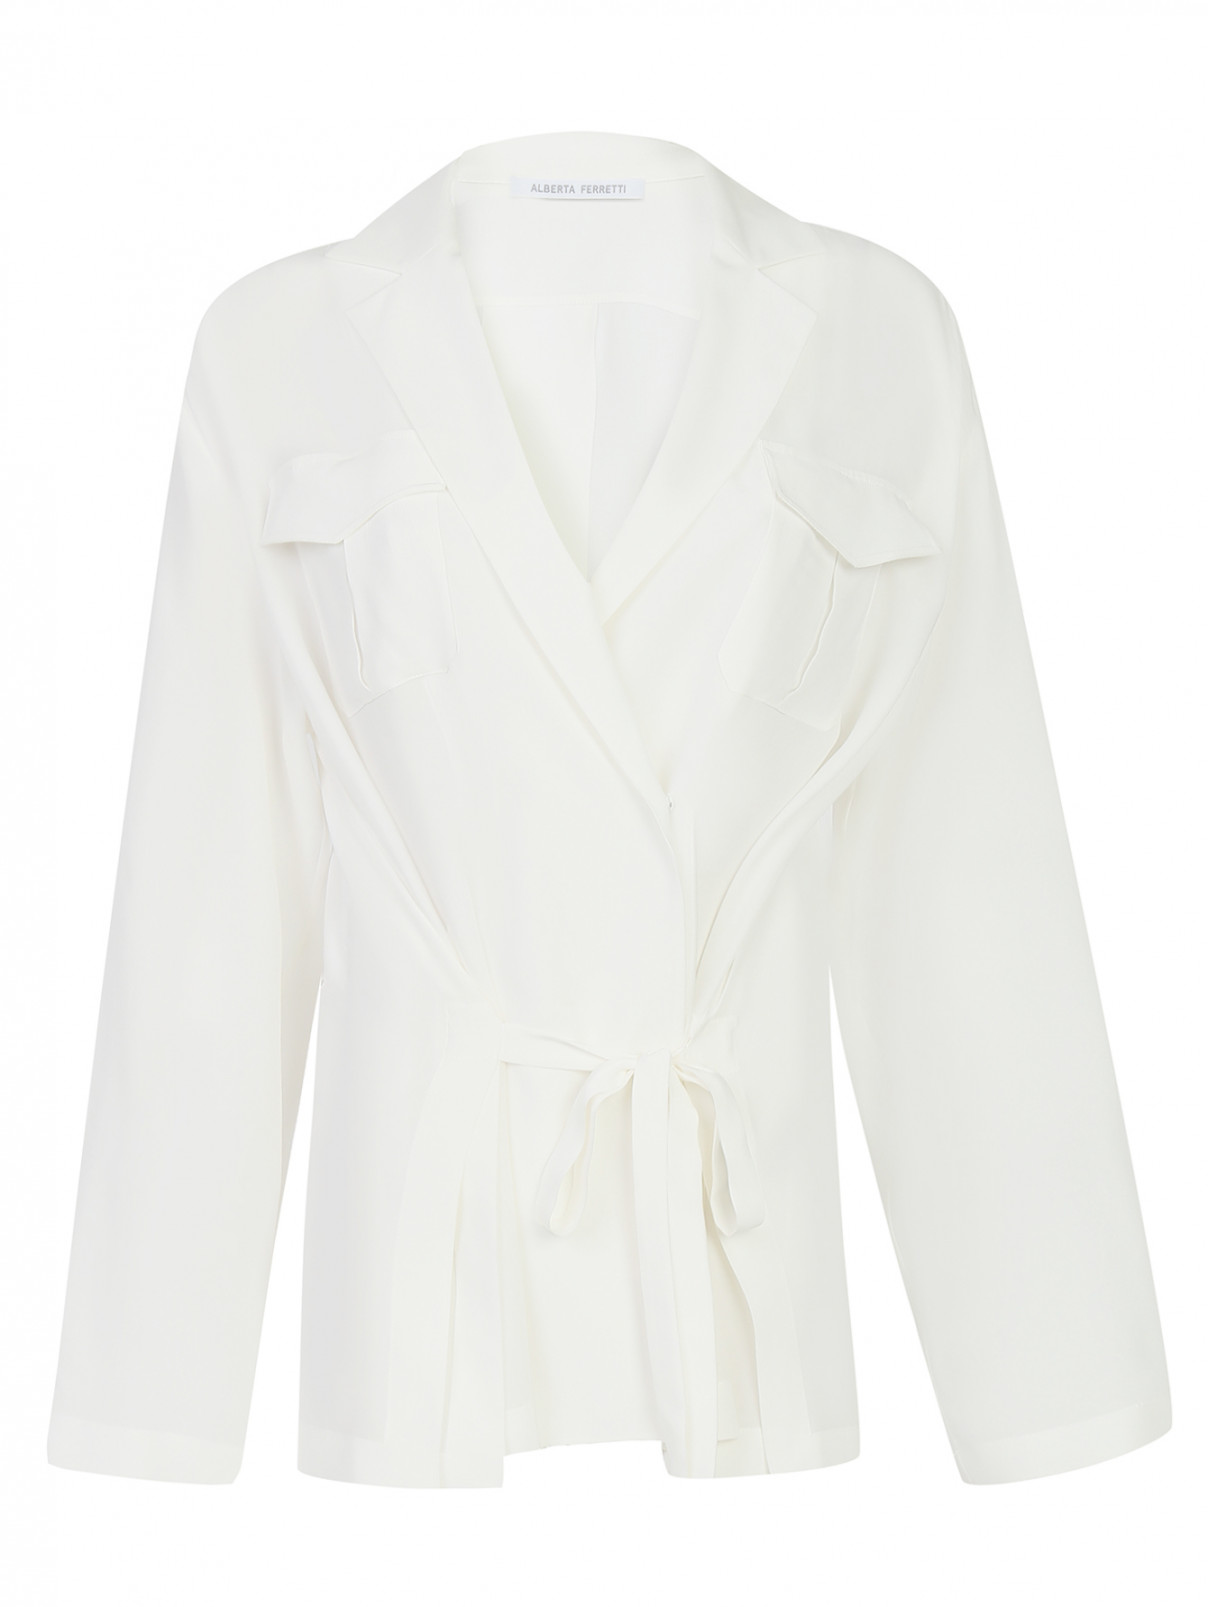 Шелковая блуза с запахом Alberta Ferretti  –  Общий вид  – Цвет:  Белый